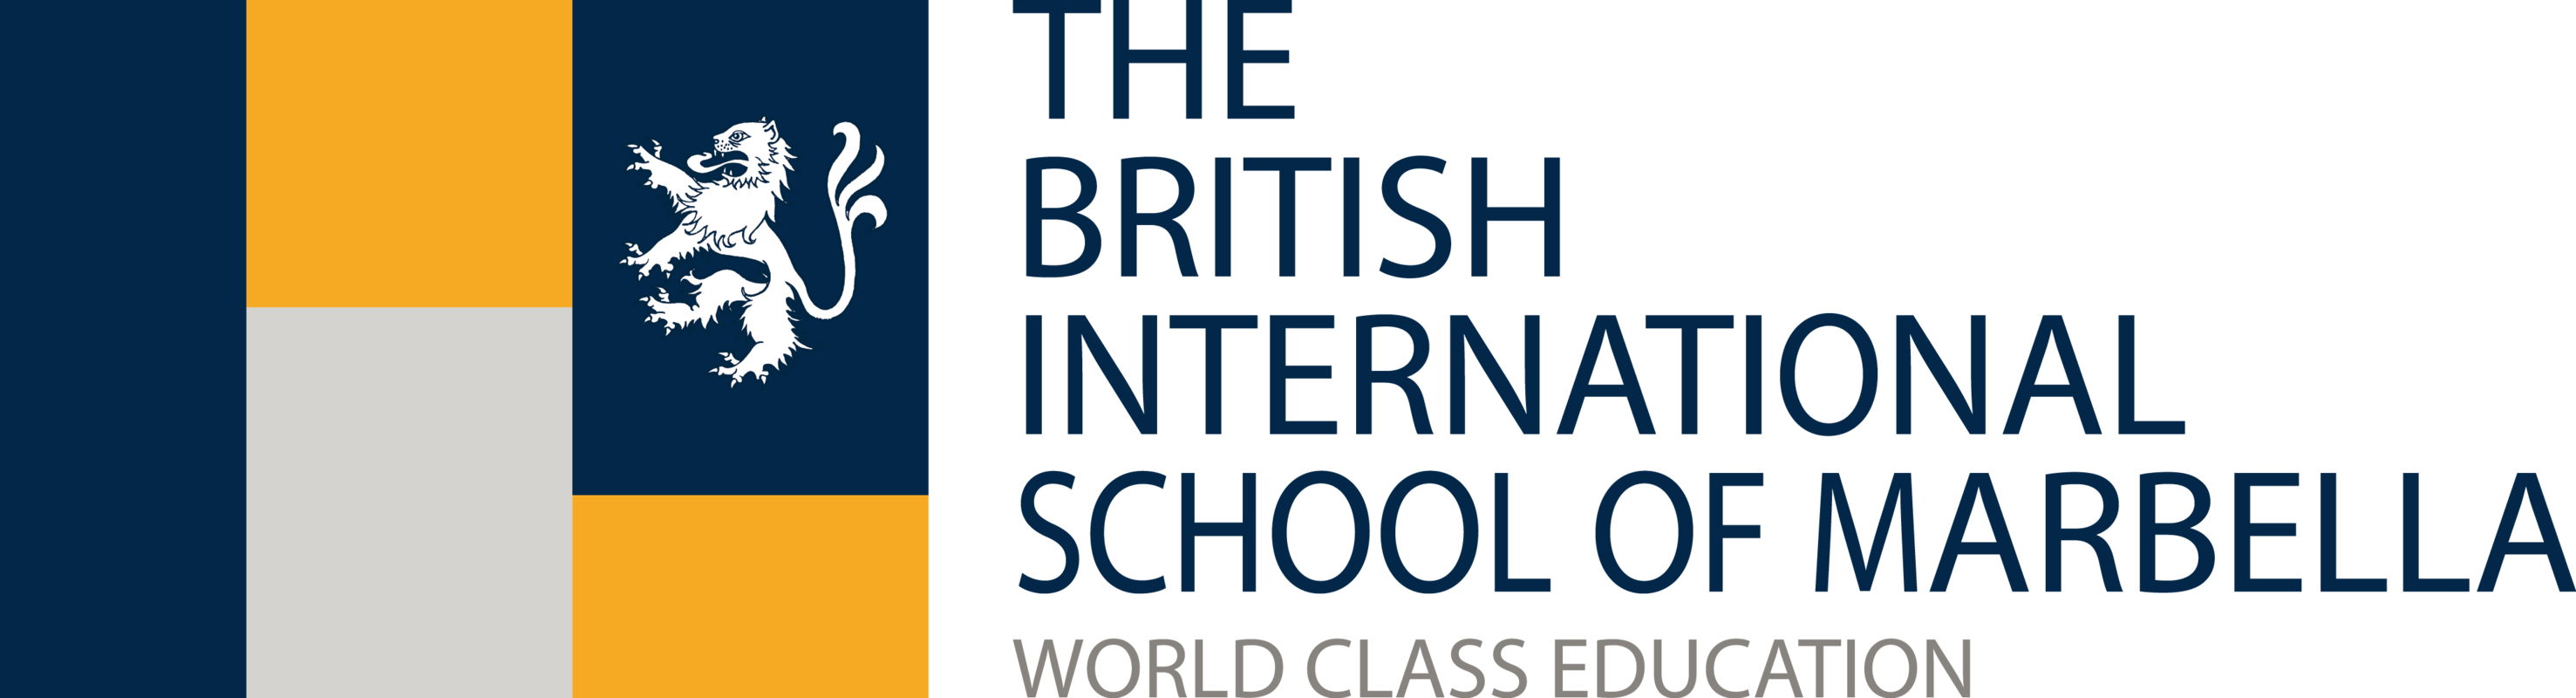 Логотип британской частной школы The British International School of Marbella Андалусия Марбелья